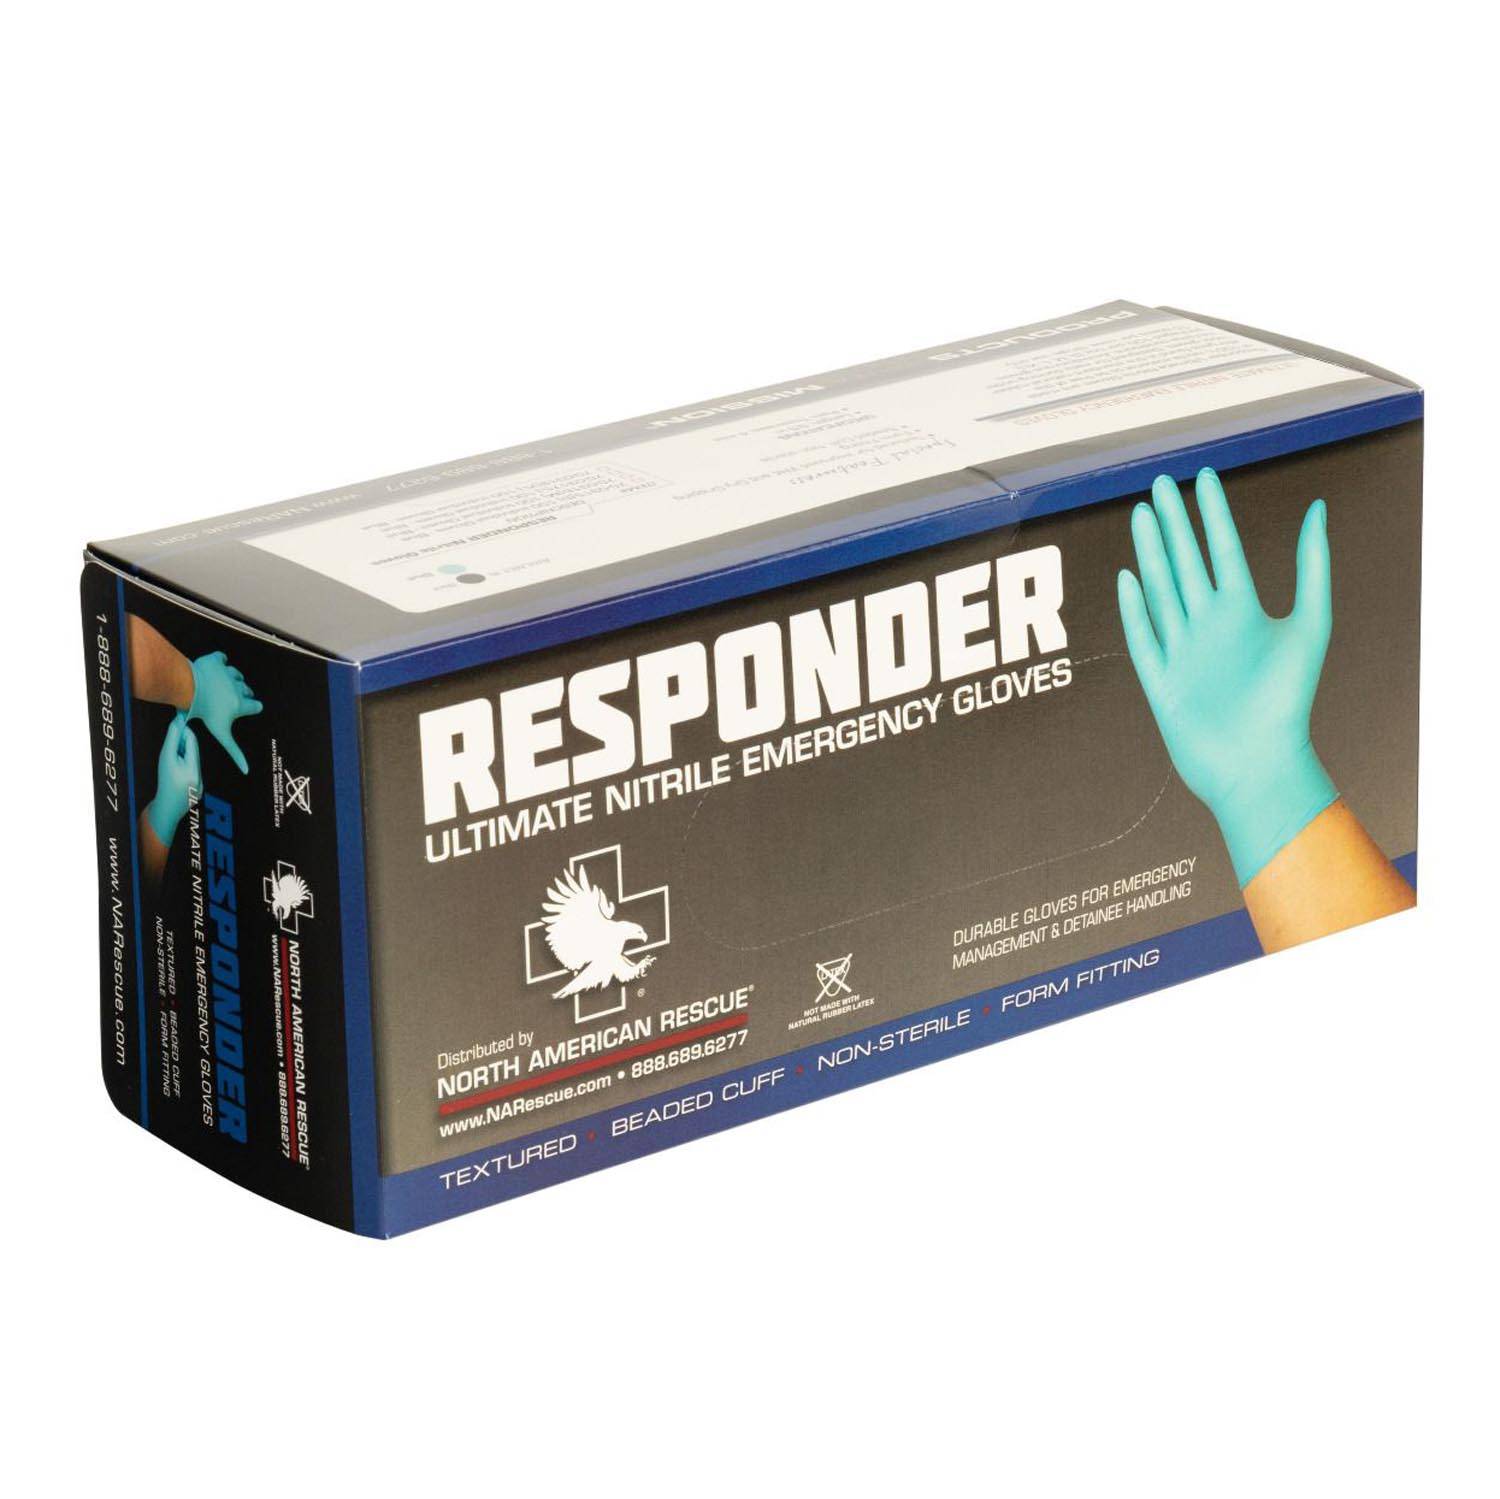 North American Rescue Responder Nitrile Gloves - Blue, 100